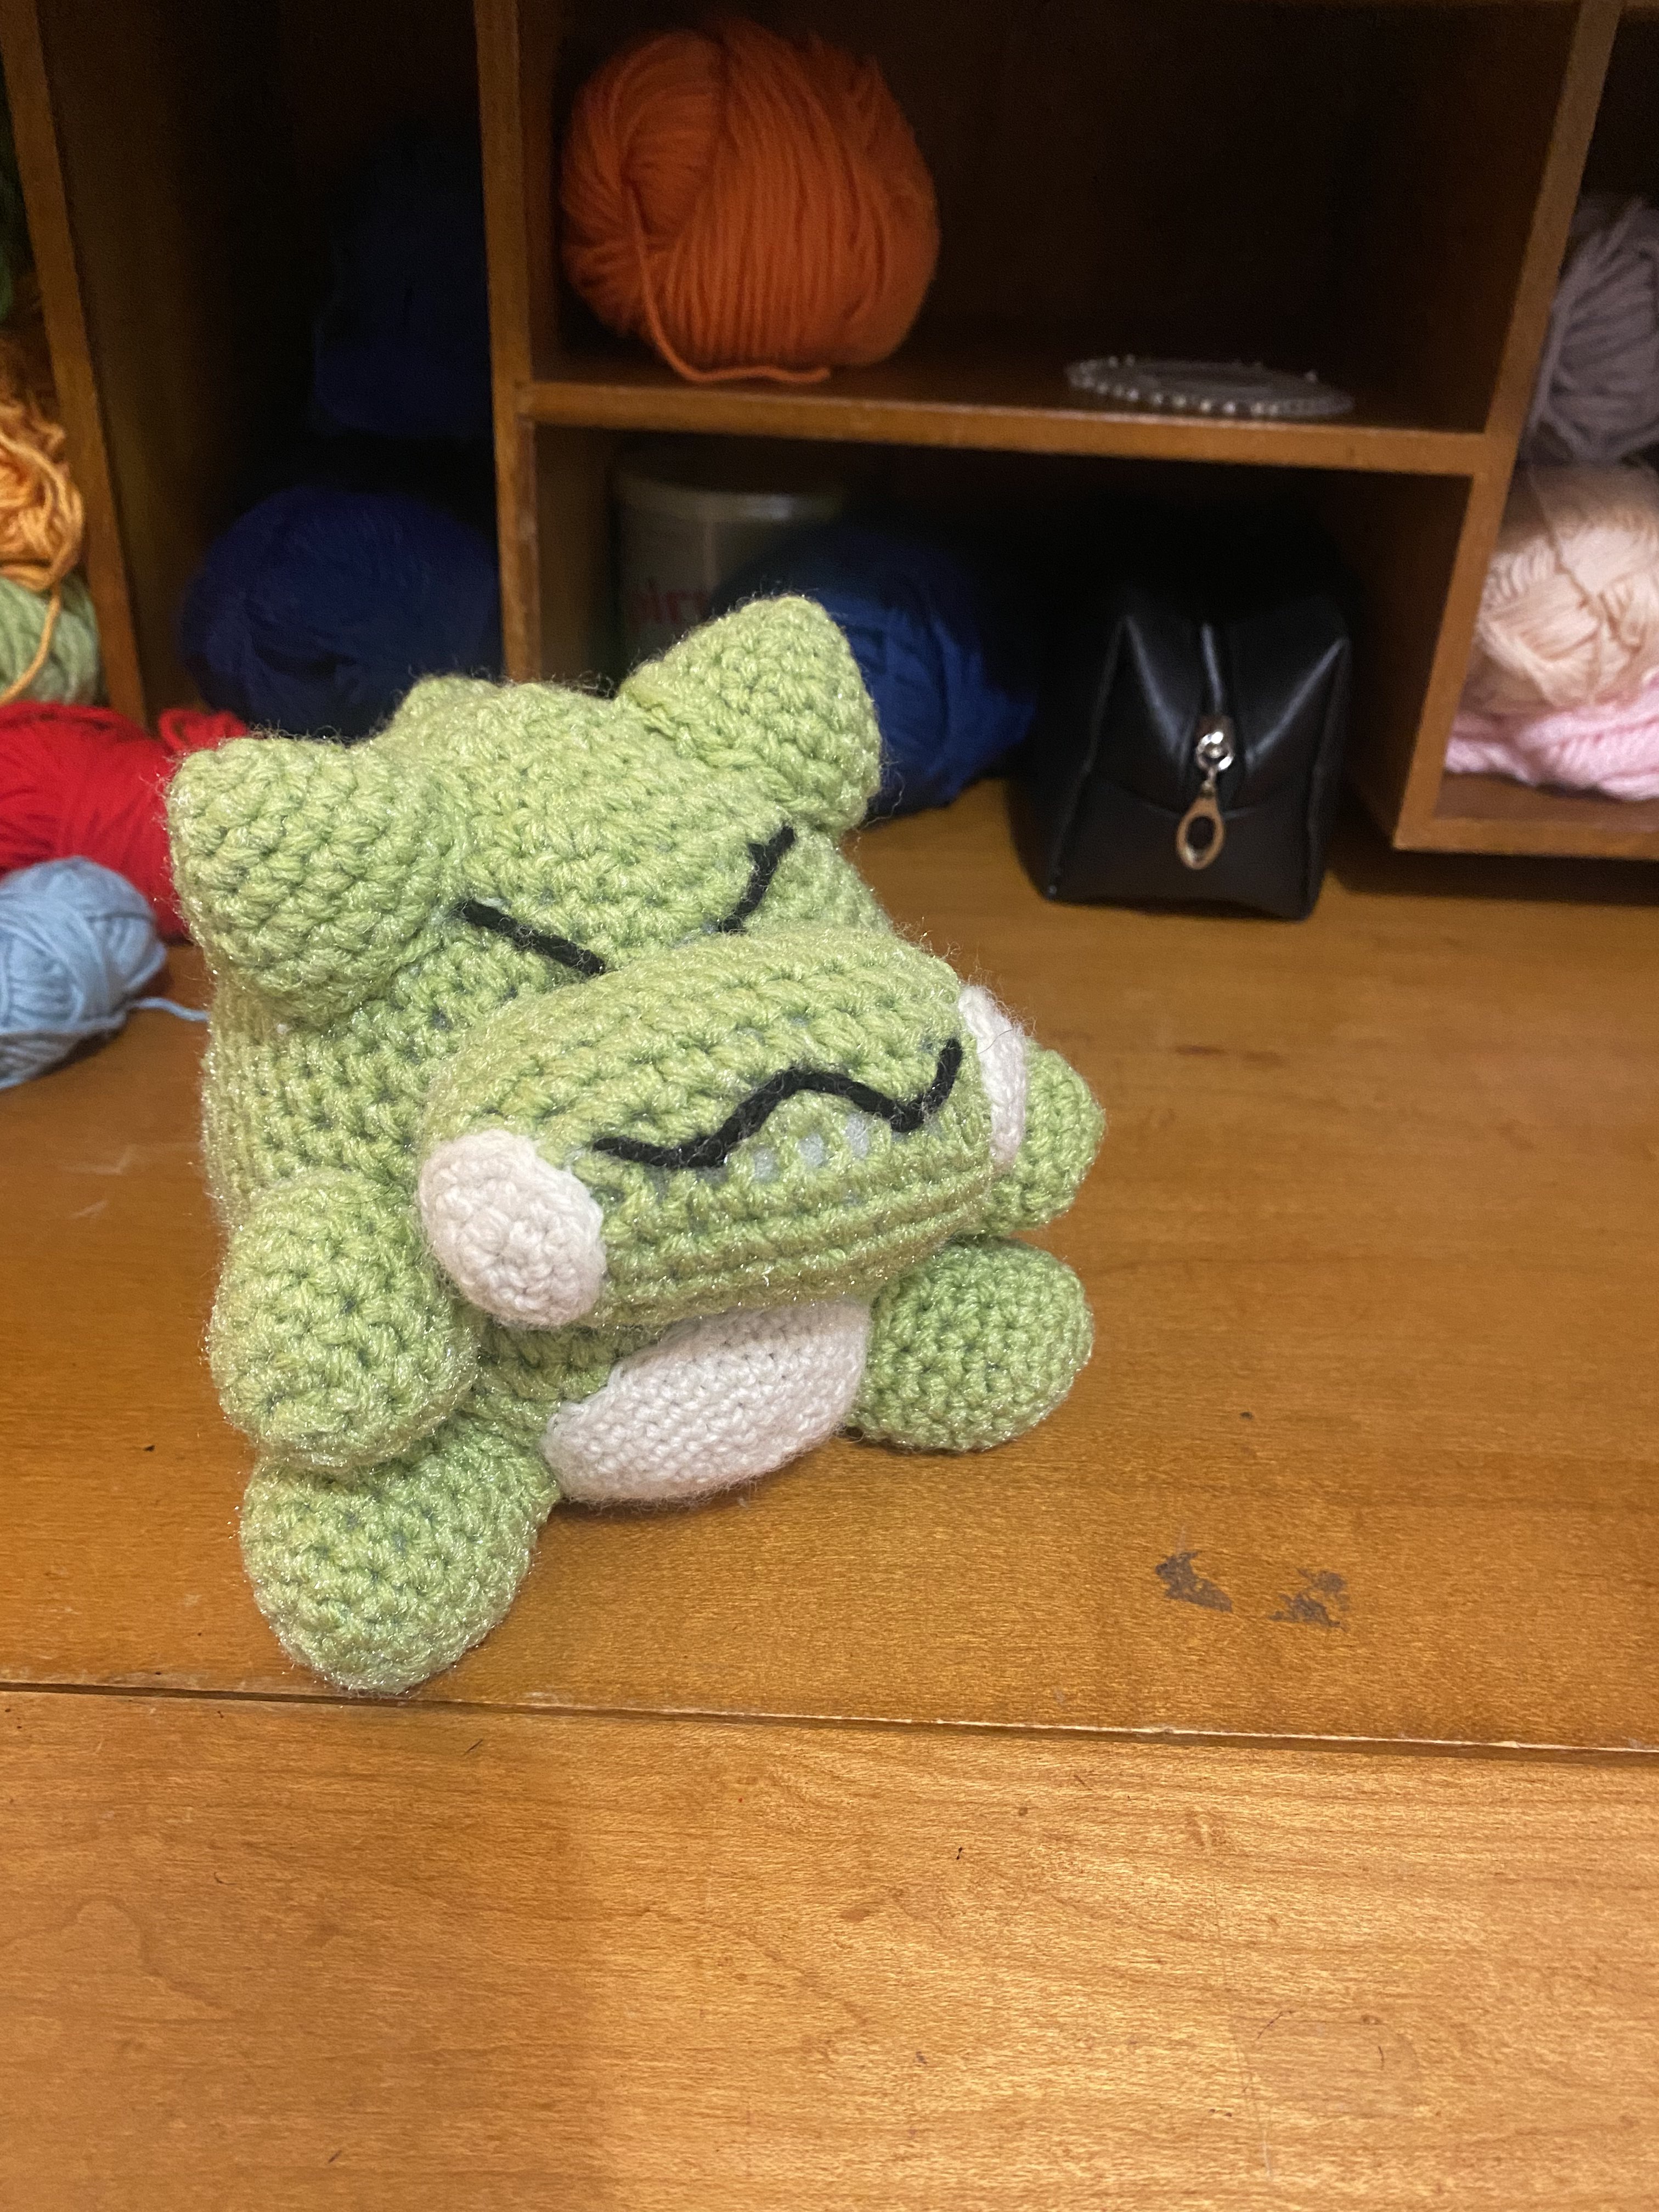 A reptile-like crochet stuffed toy